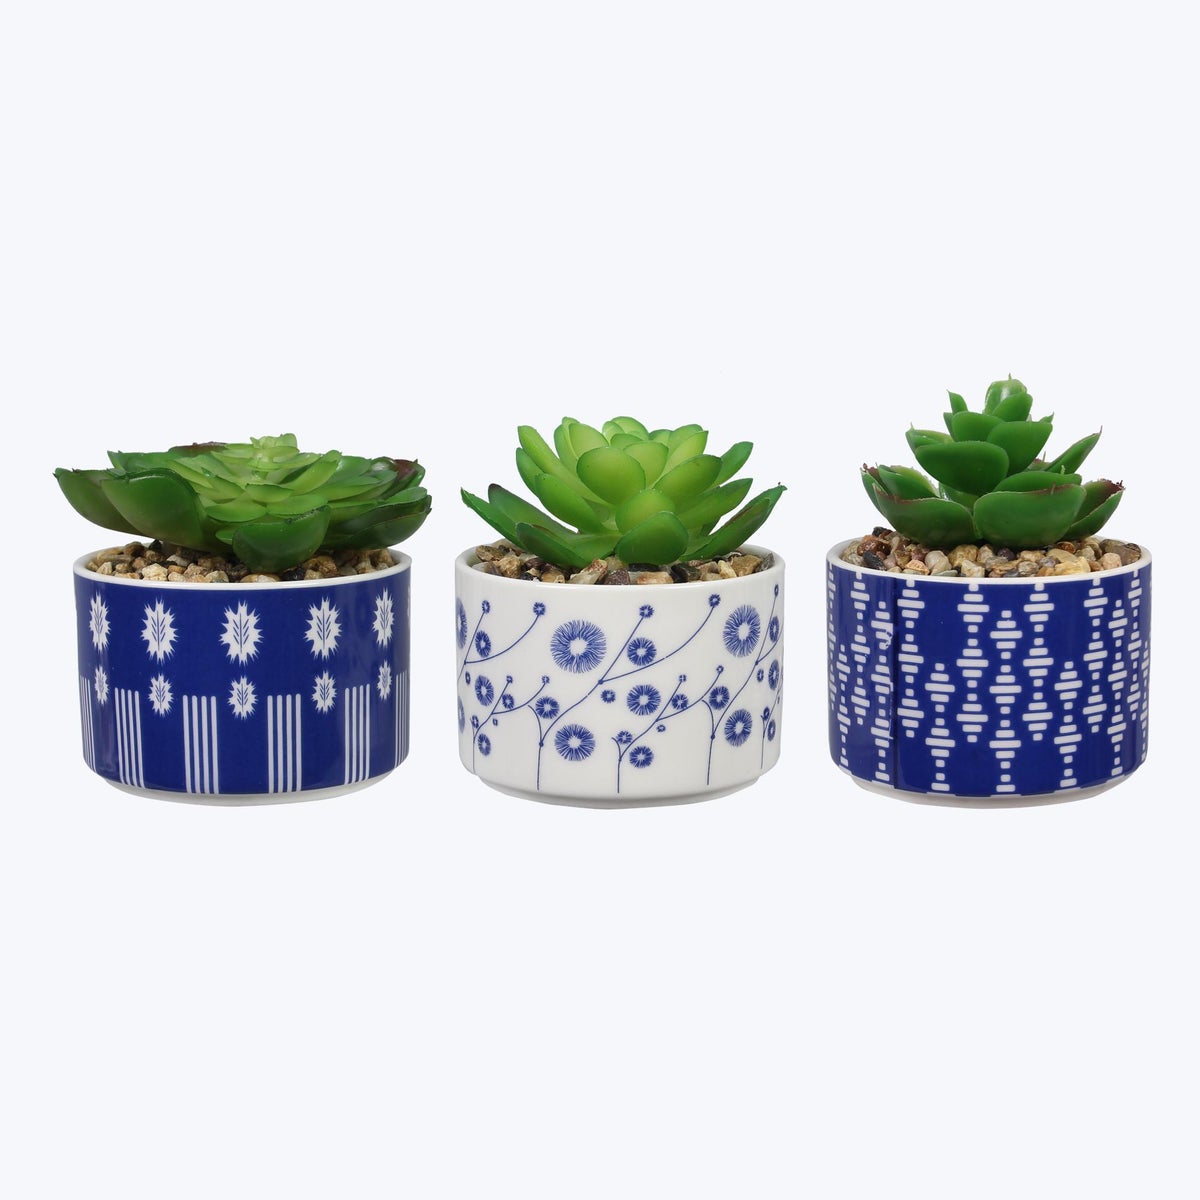 Ceramic Blue Planters with Artificial Succulents, 3 Assortment